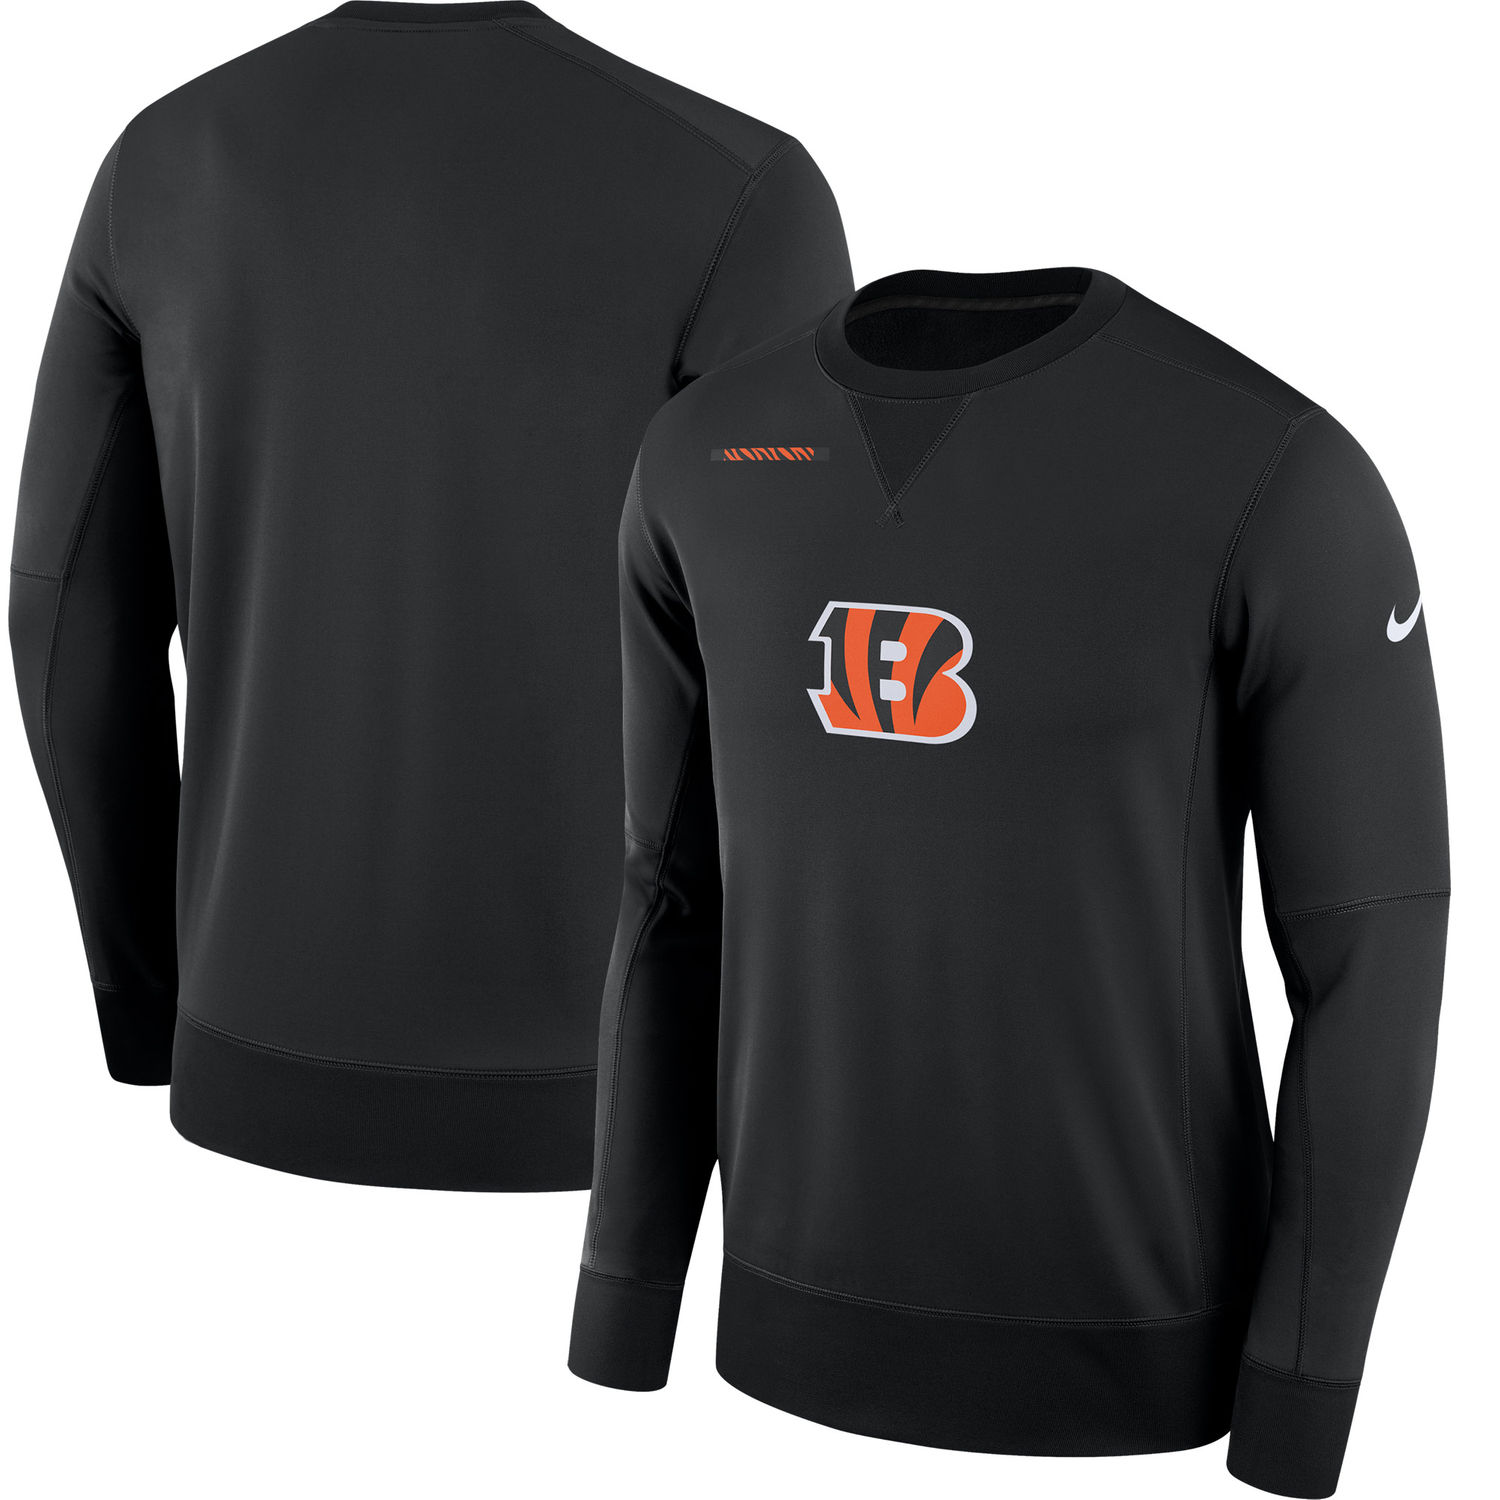 Men's Cincinnati Bengals Nike Black Sideline Team Logo Performance Sweatshirt